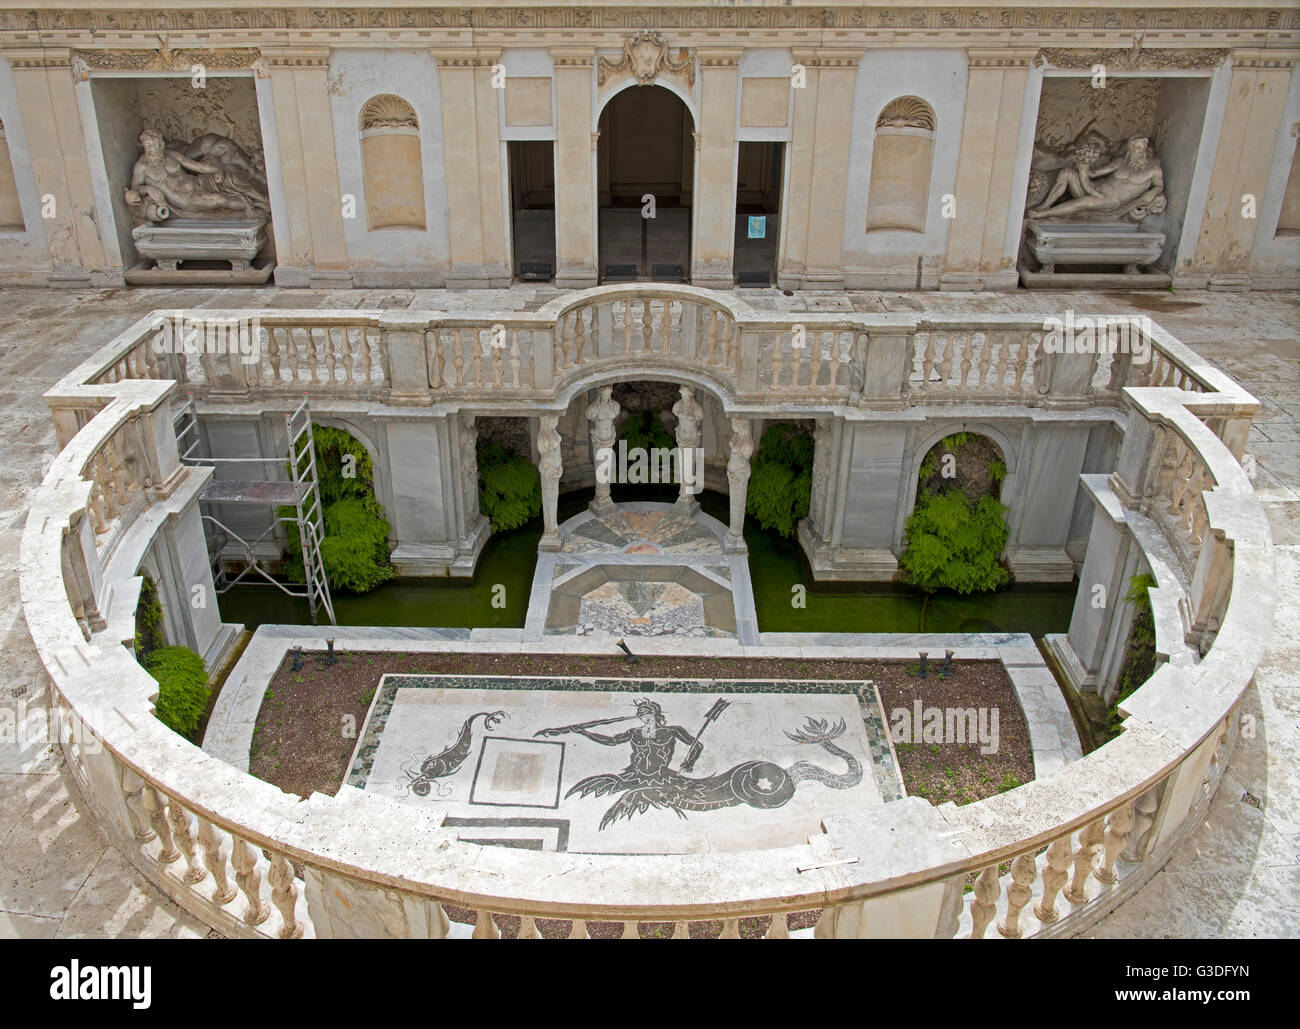 Italien, Rom, Museo Nazionale Etrusco di Villa Giulia, Nymphäum im zweiten Innenhof. Der Fontana dell'Acqua Vergine, geplant und Stock Photo